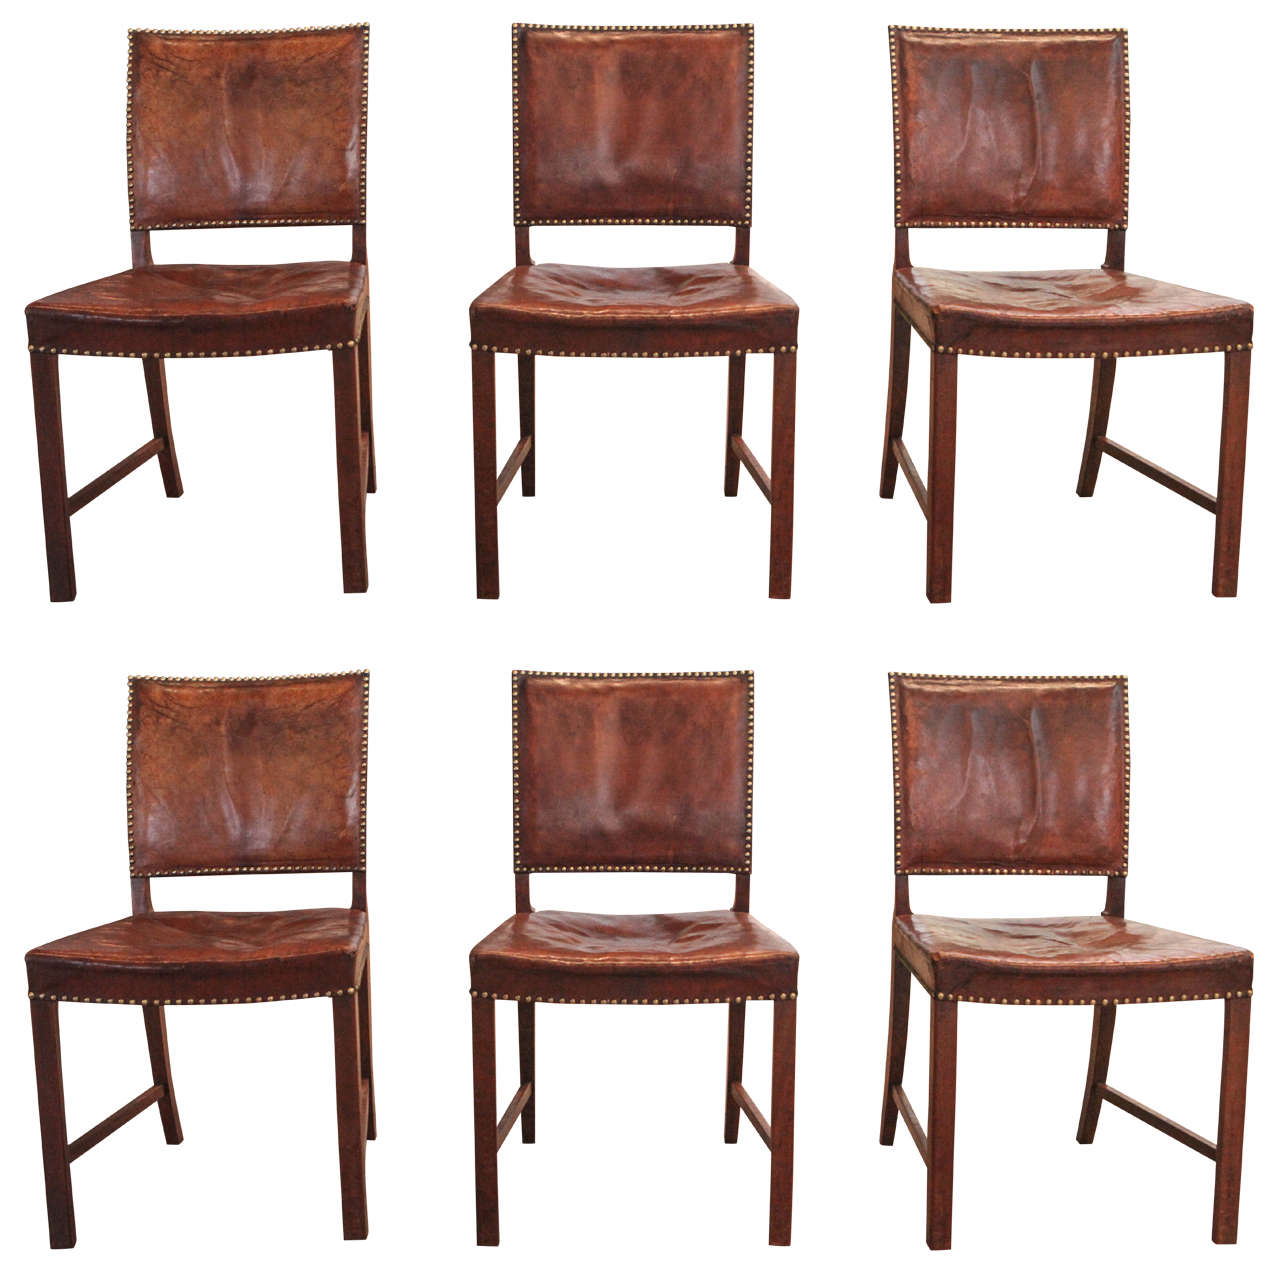 Set of six Jacob Kjaer dining chairs, 1934